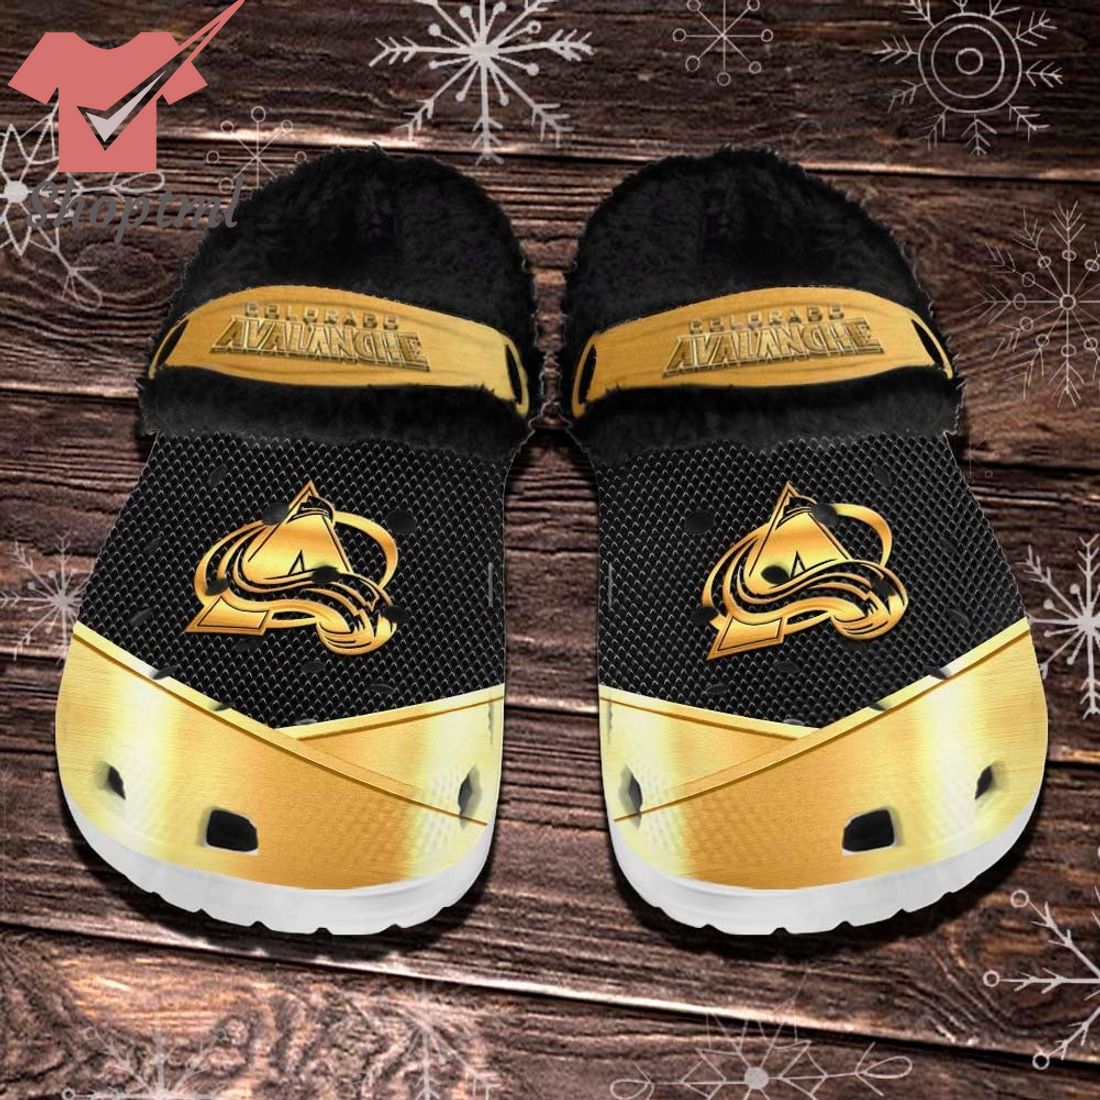 Colorado Avalanche NHL Fleece Crocs Clogs Shoes